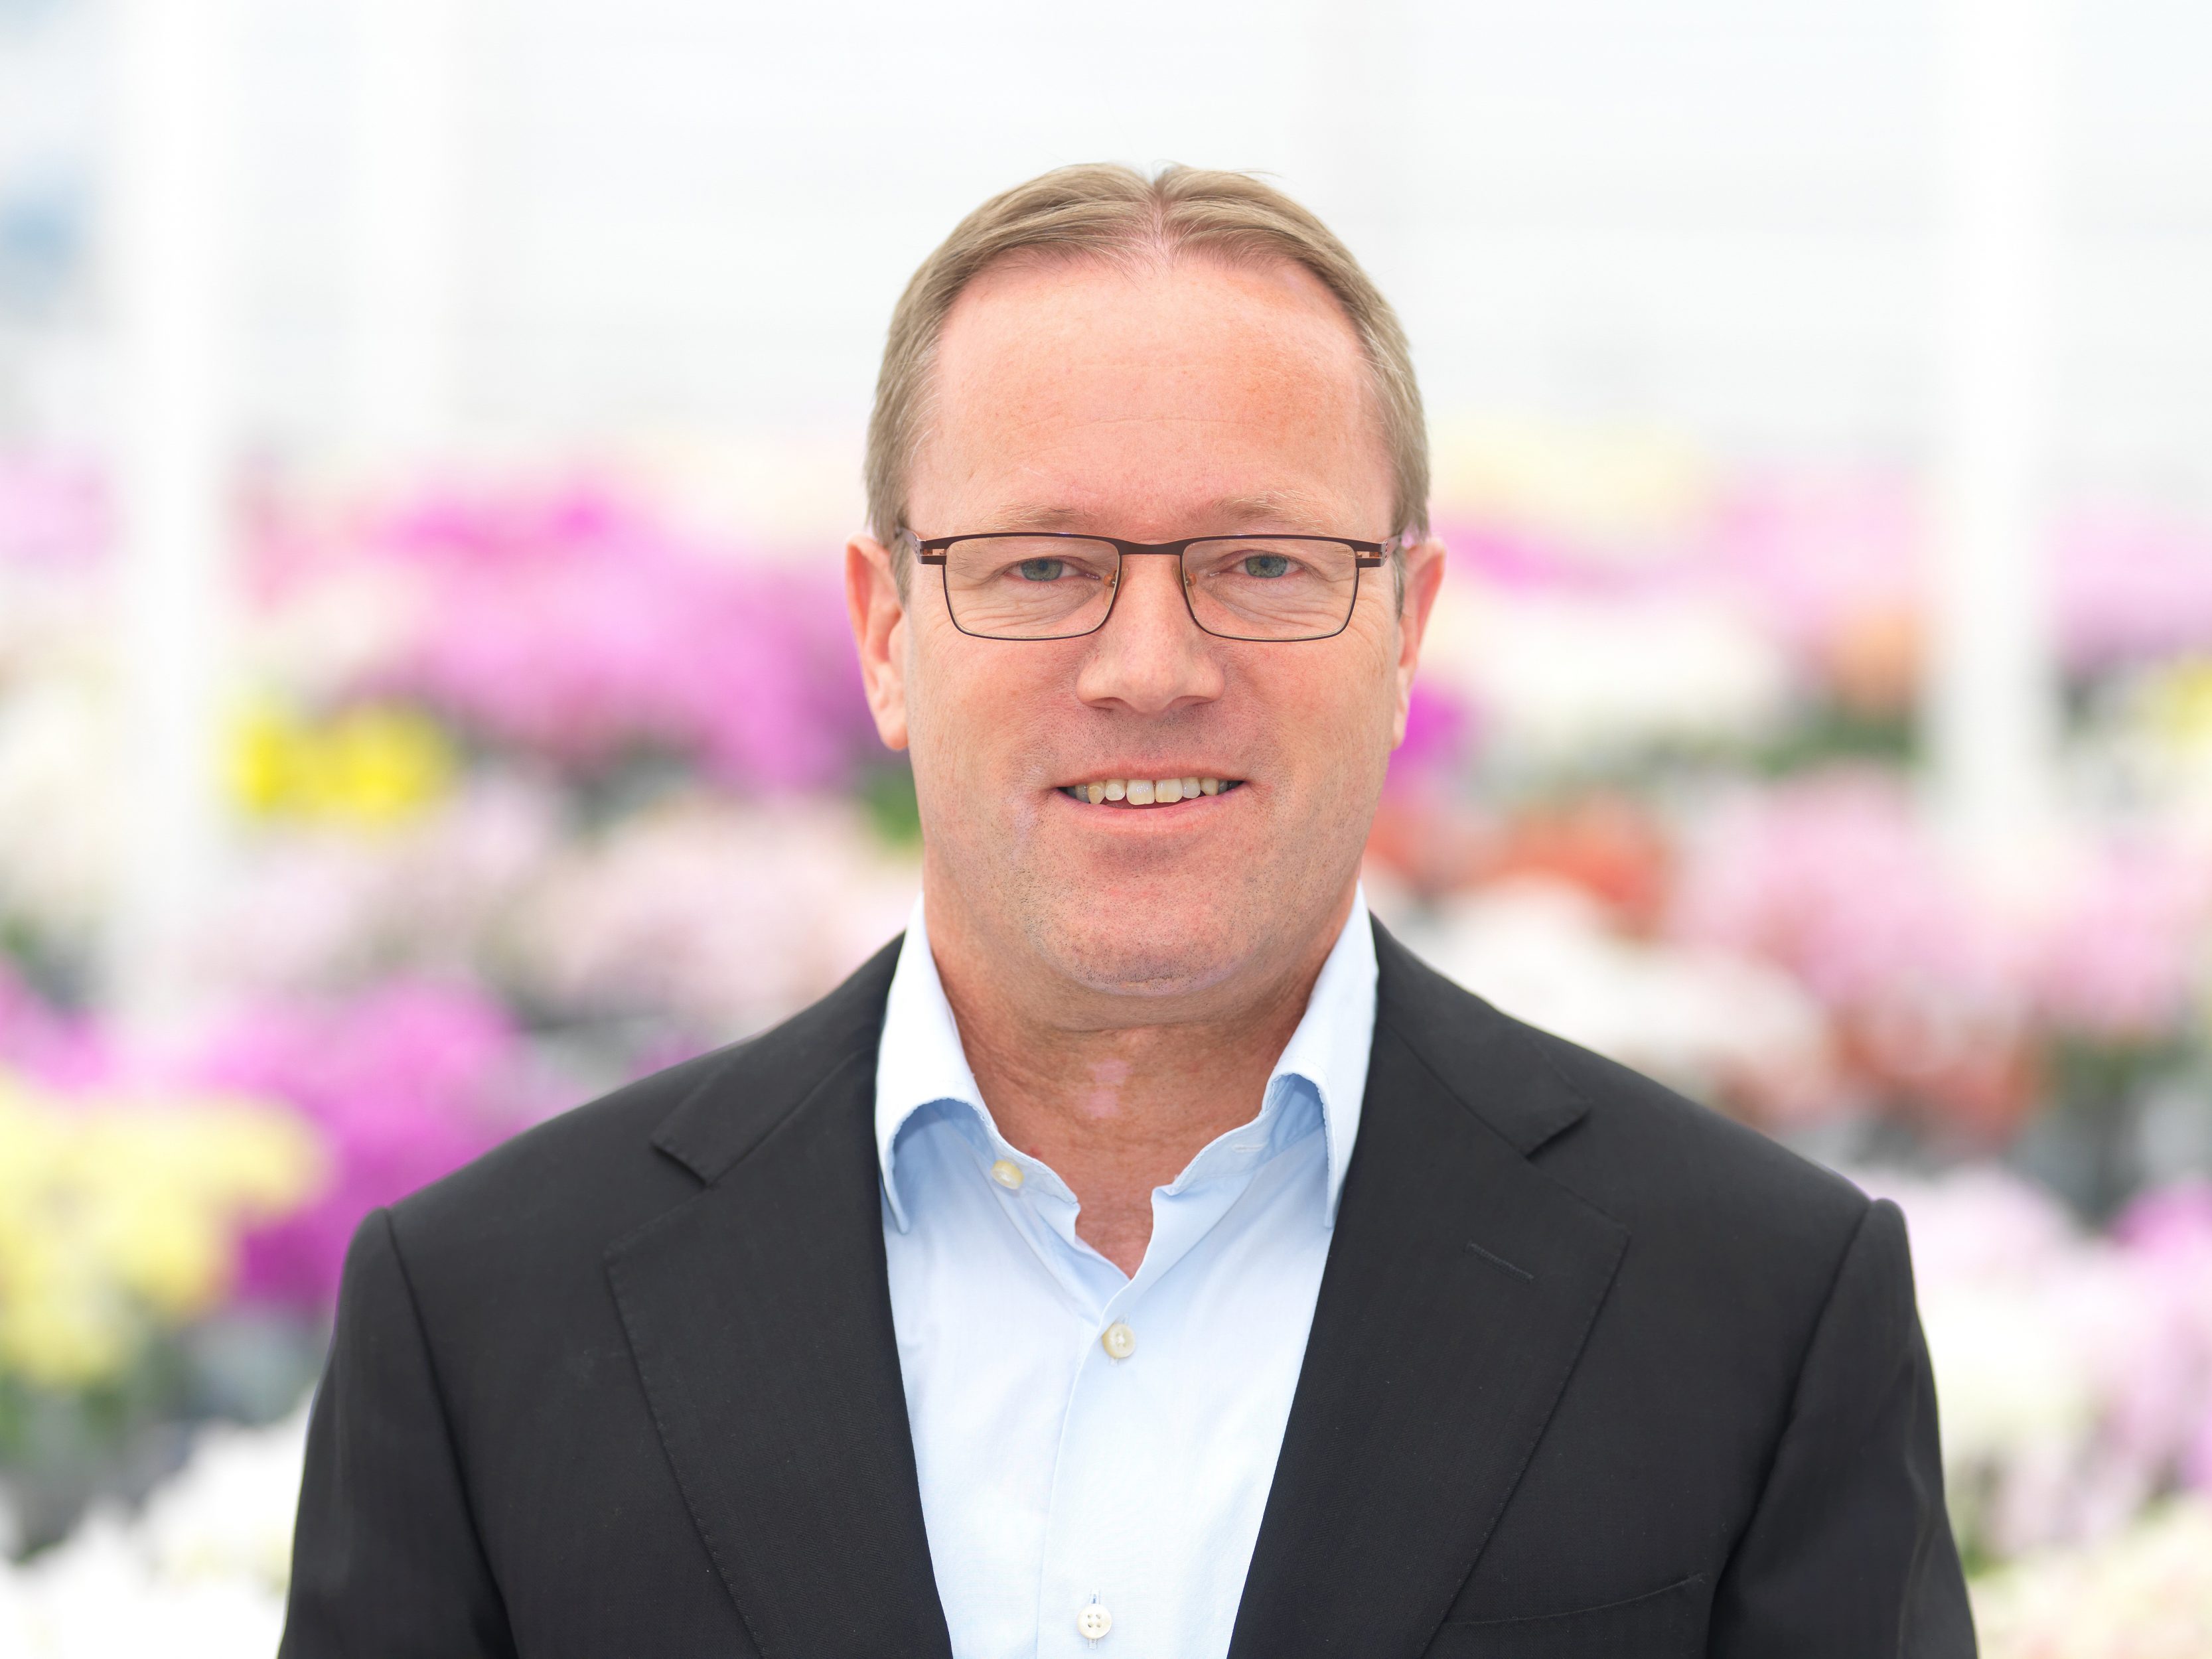 Frank Verhoogt, Account Manager Orchids